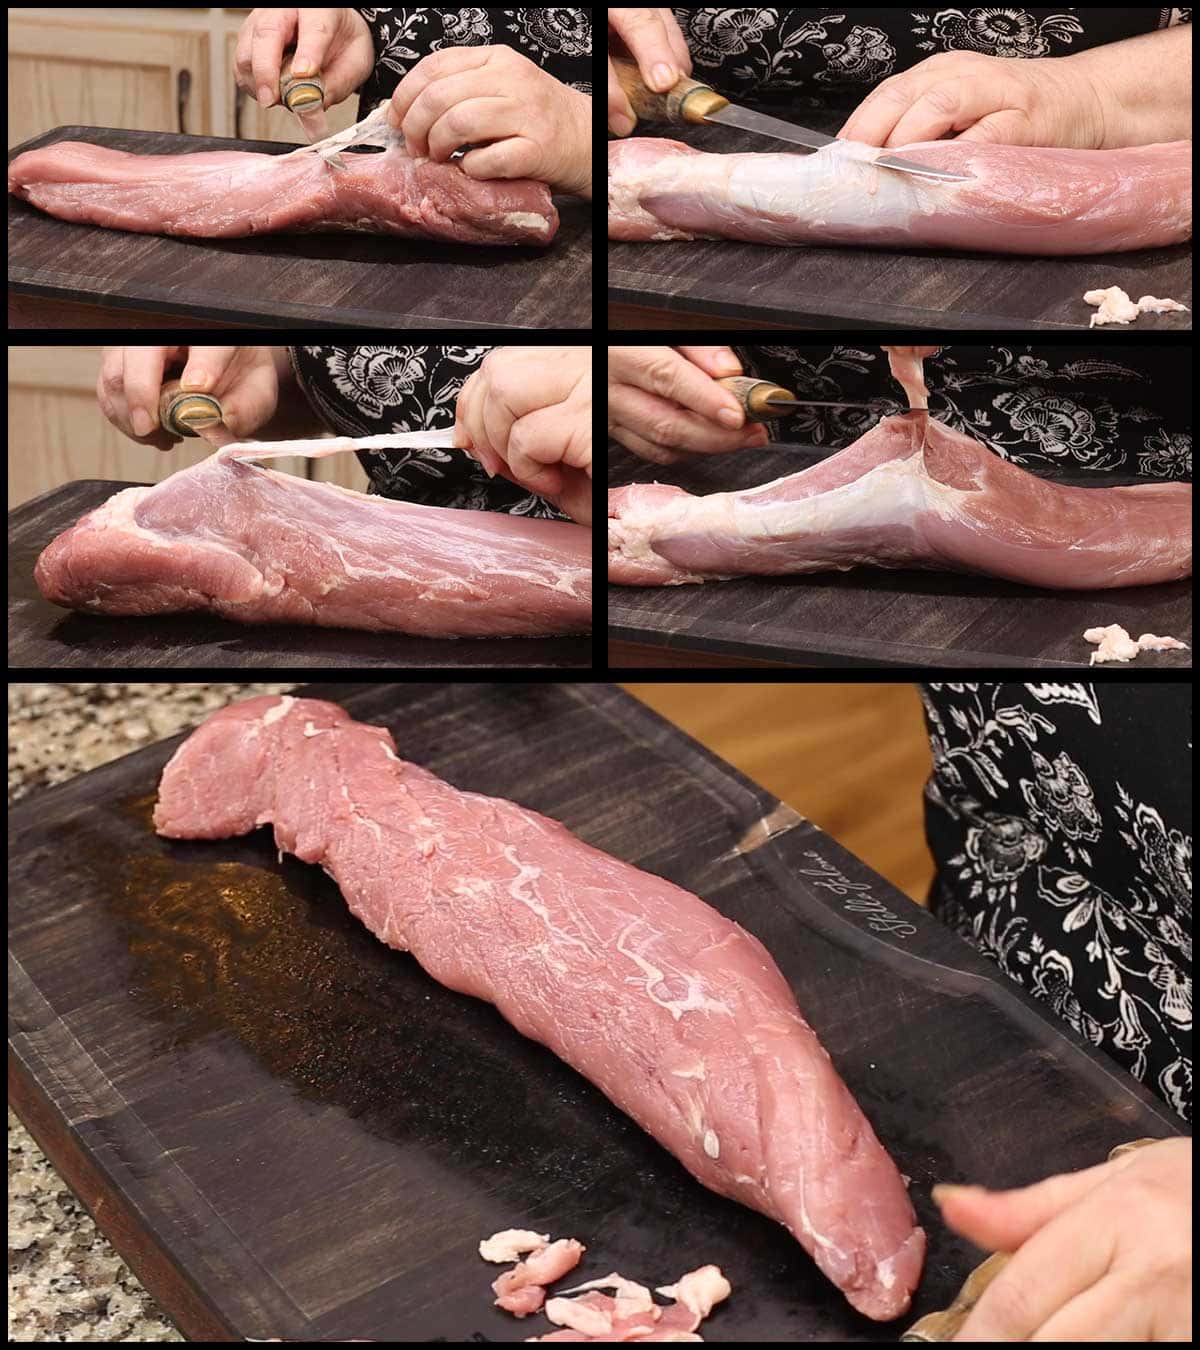 removing silverskin from pork tenderloin